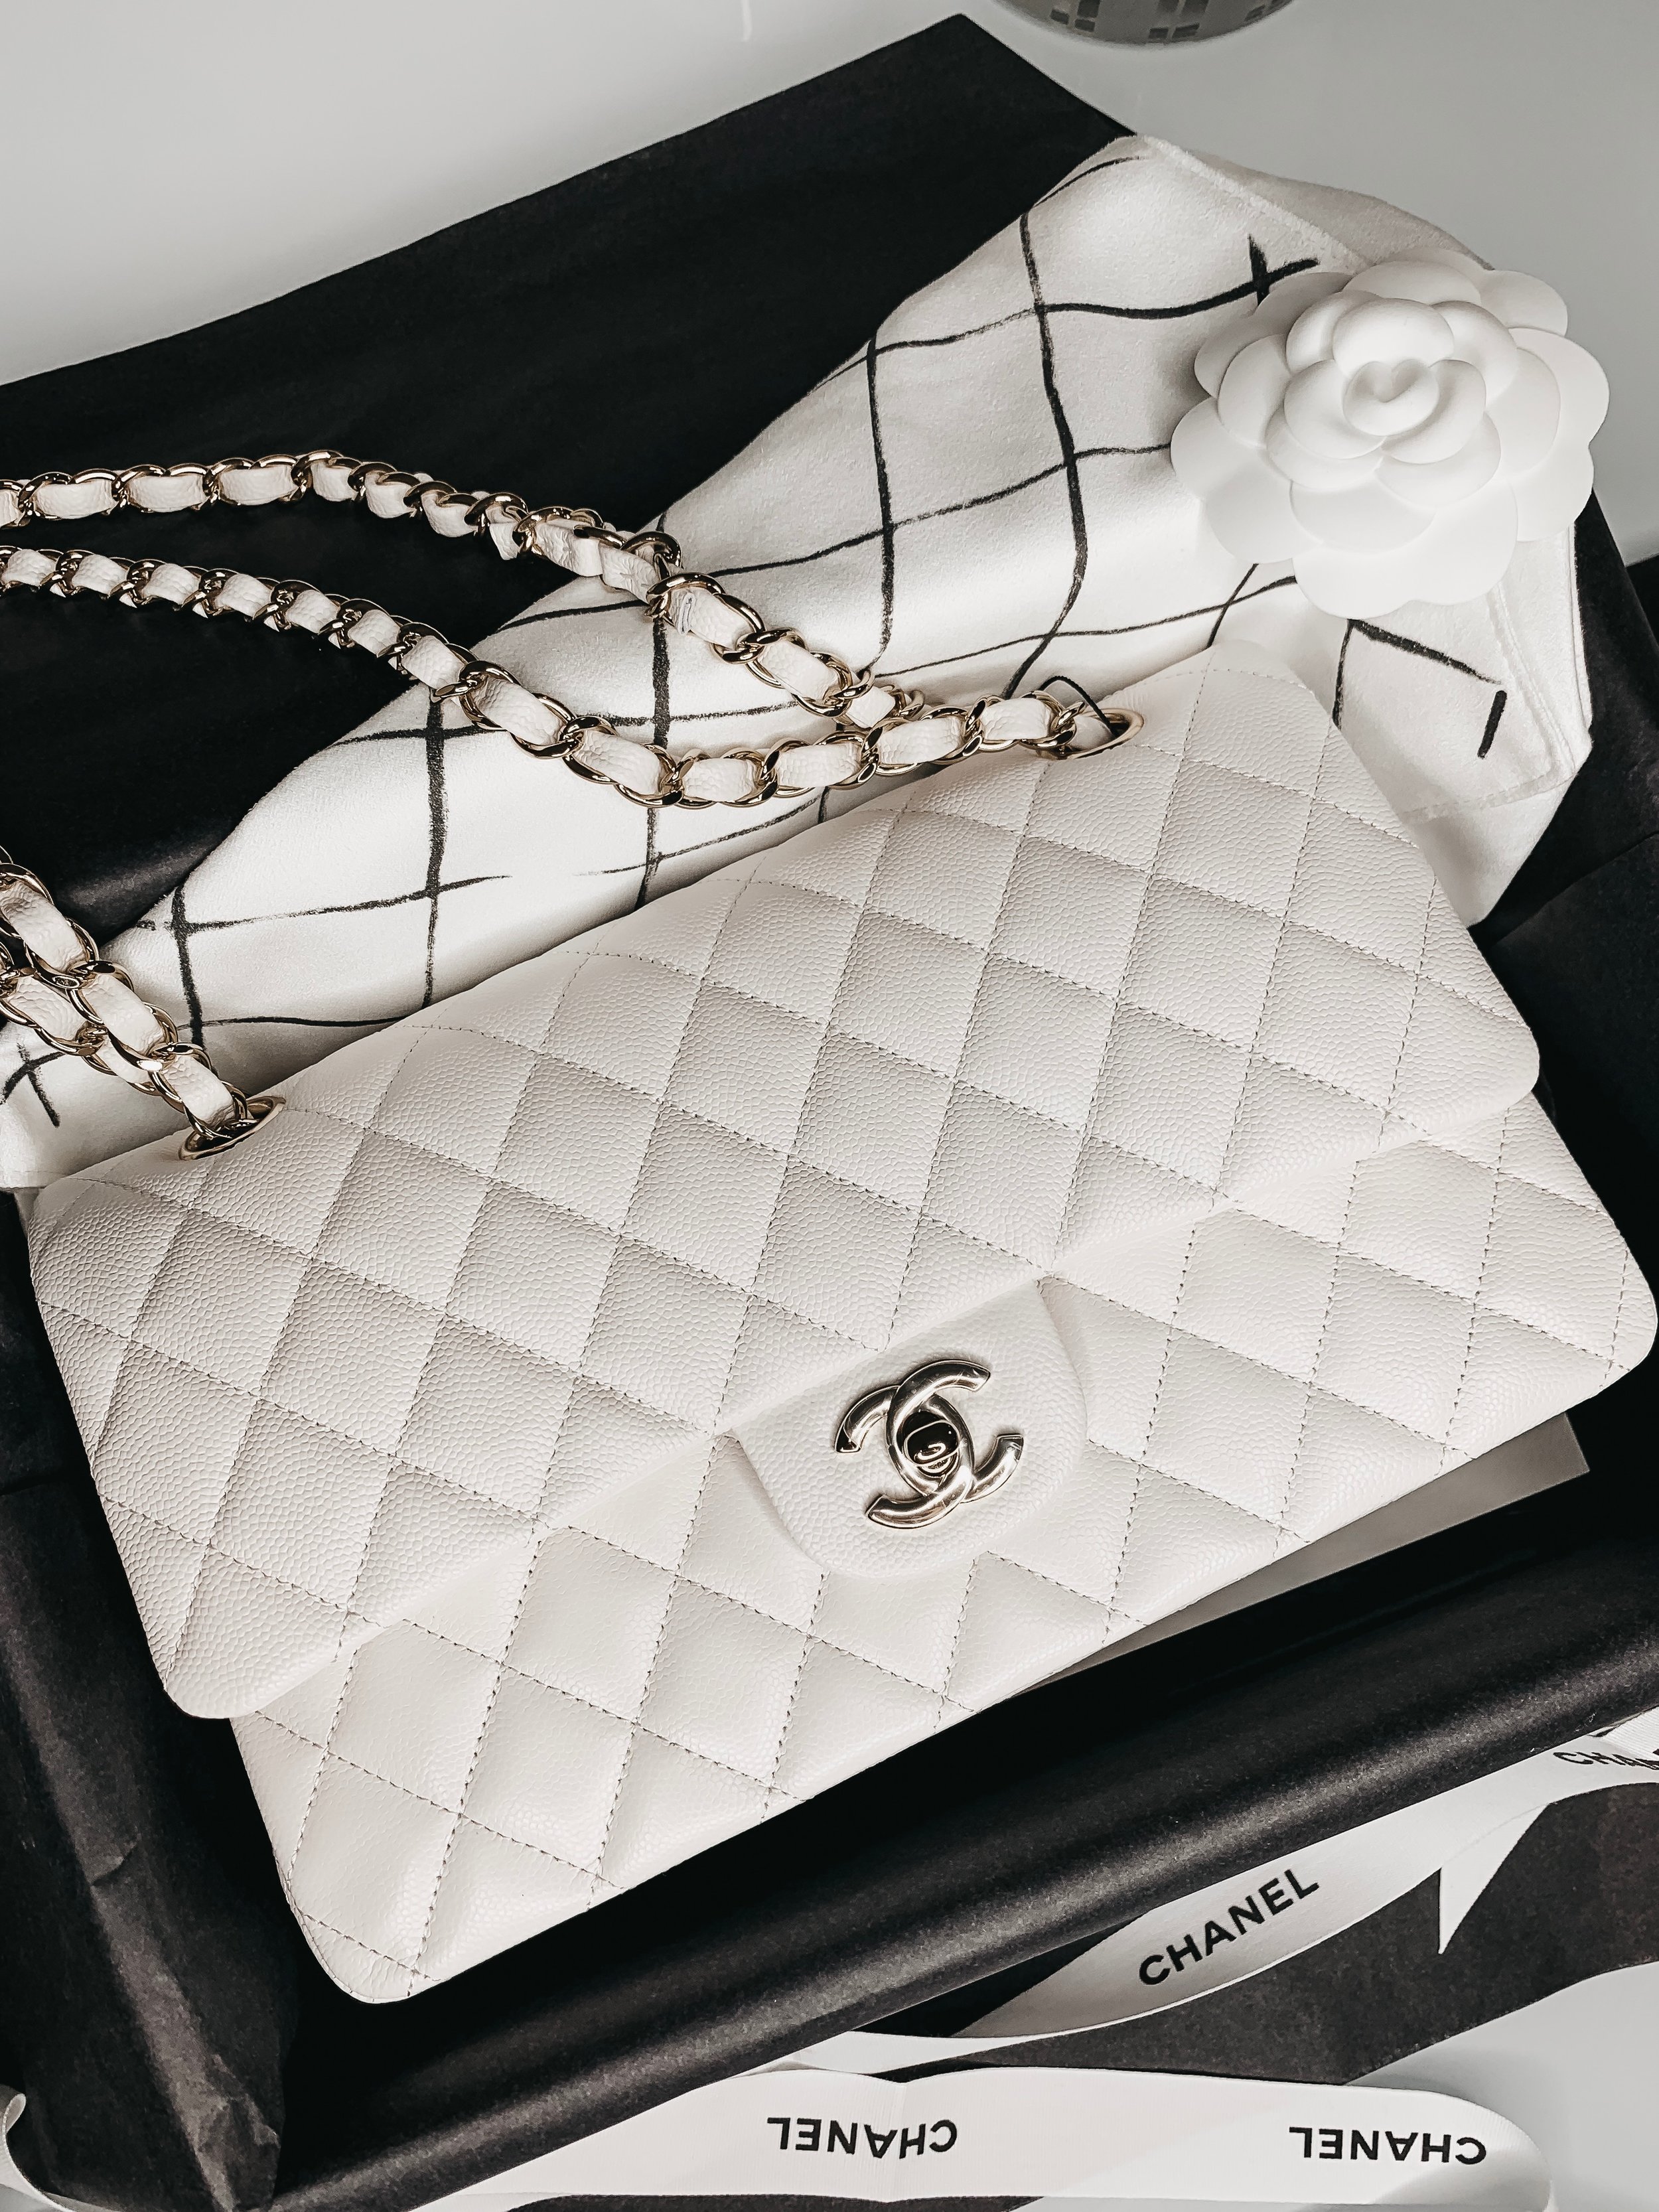 Chanel Bags- How Do I Get The Rare Pieces? — Lena and the City